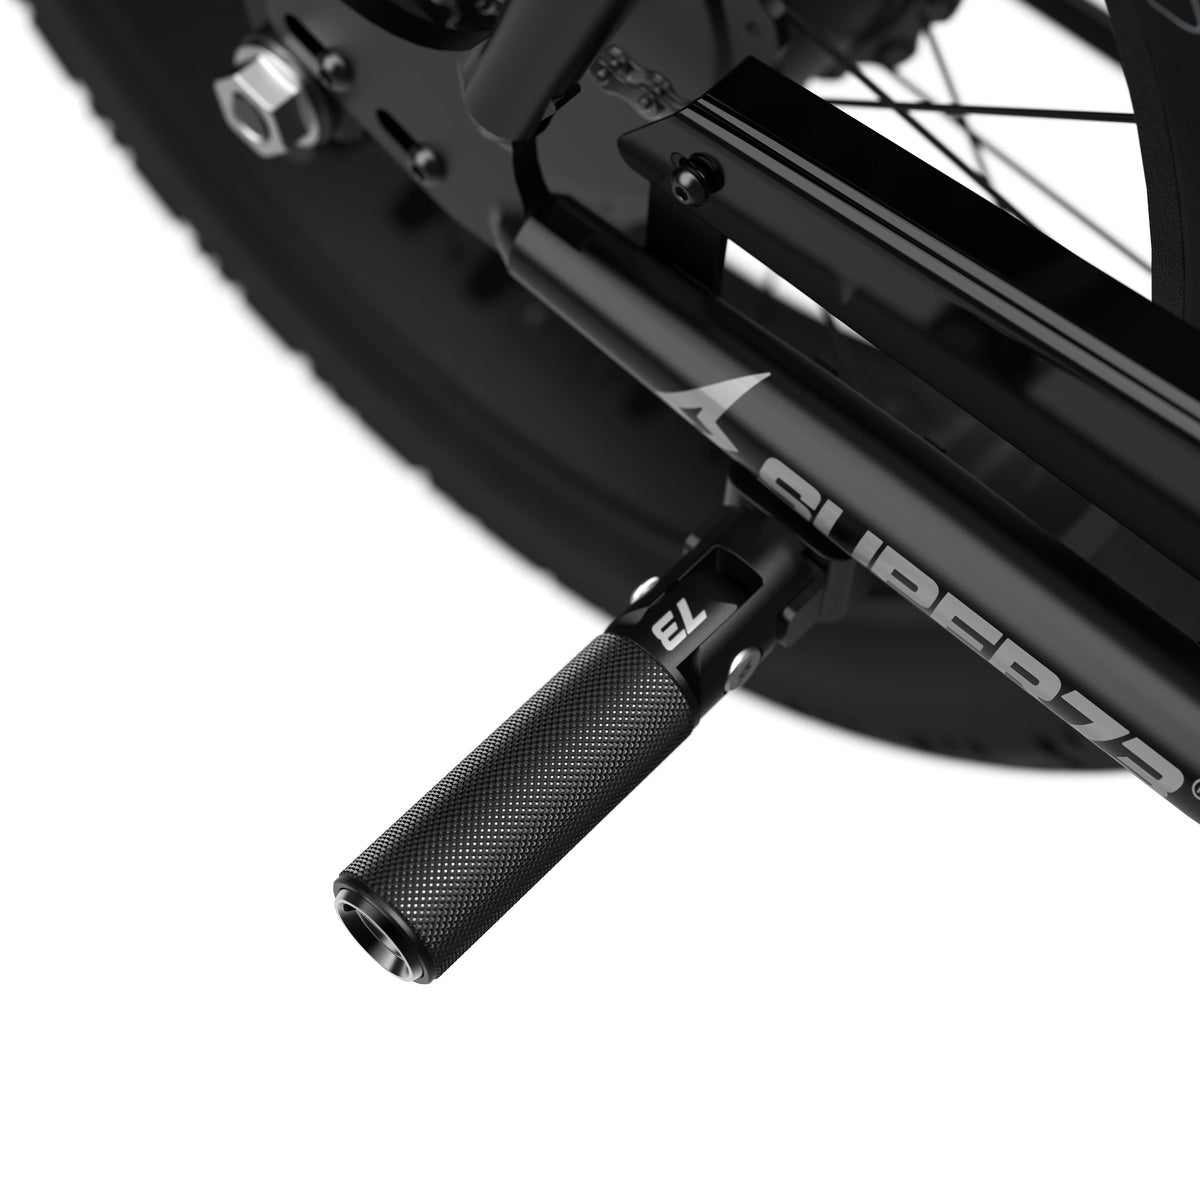 alternate view of Folding peg with black cap on bike